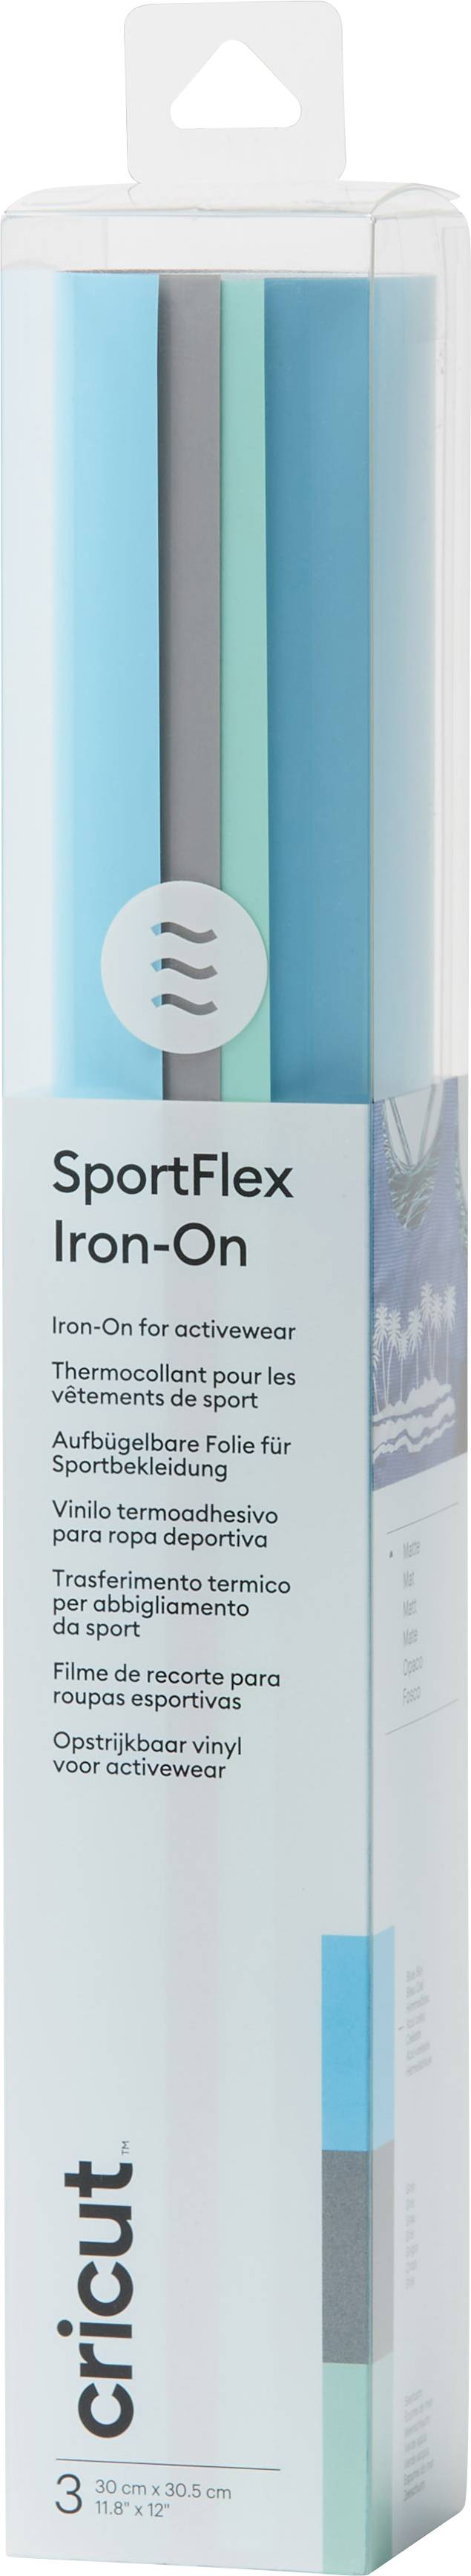 How To Use Cricut SportFlex Iron-On 